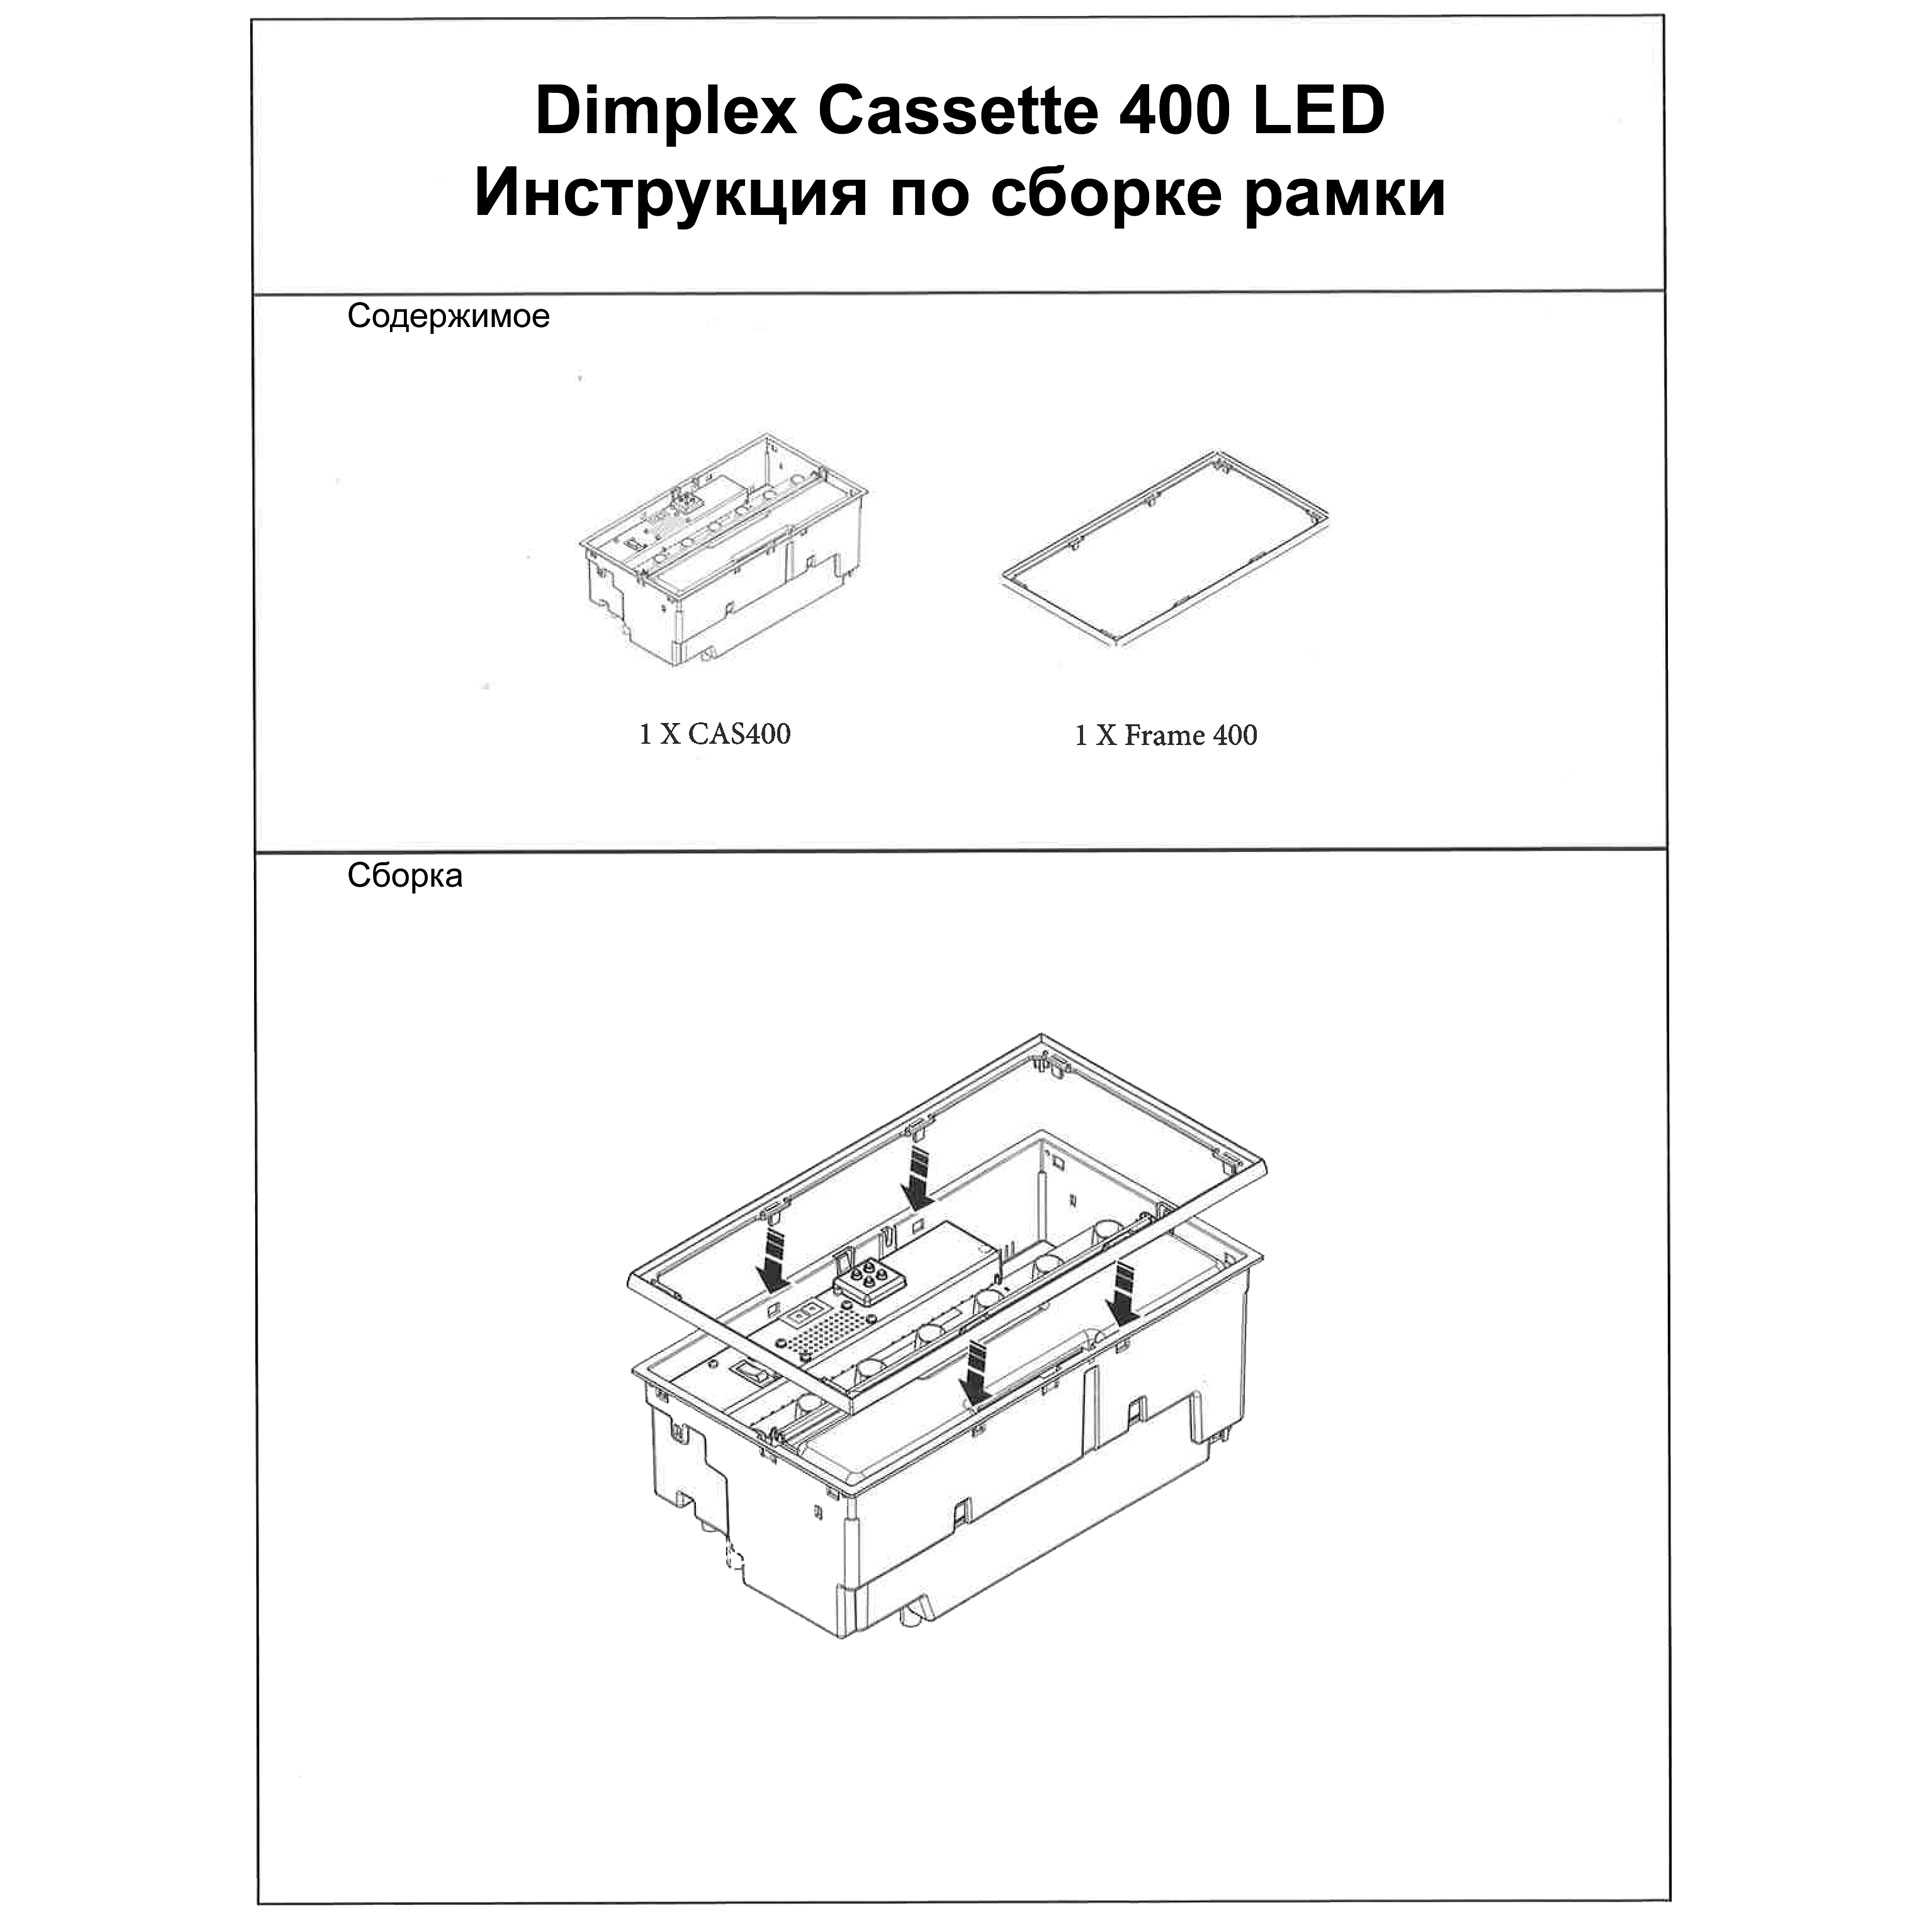 Dimplex Cassette 400 LED LOG (с дровами) Инструкция